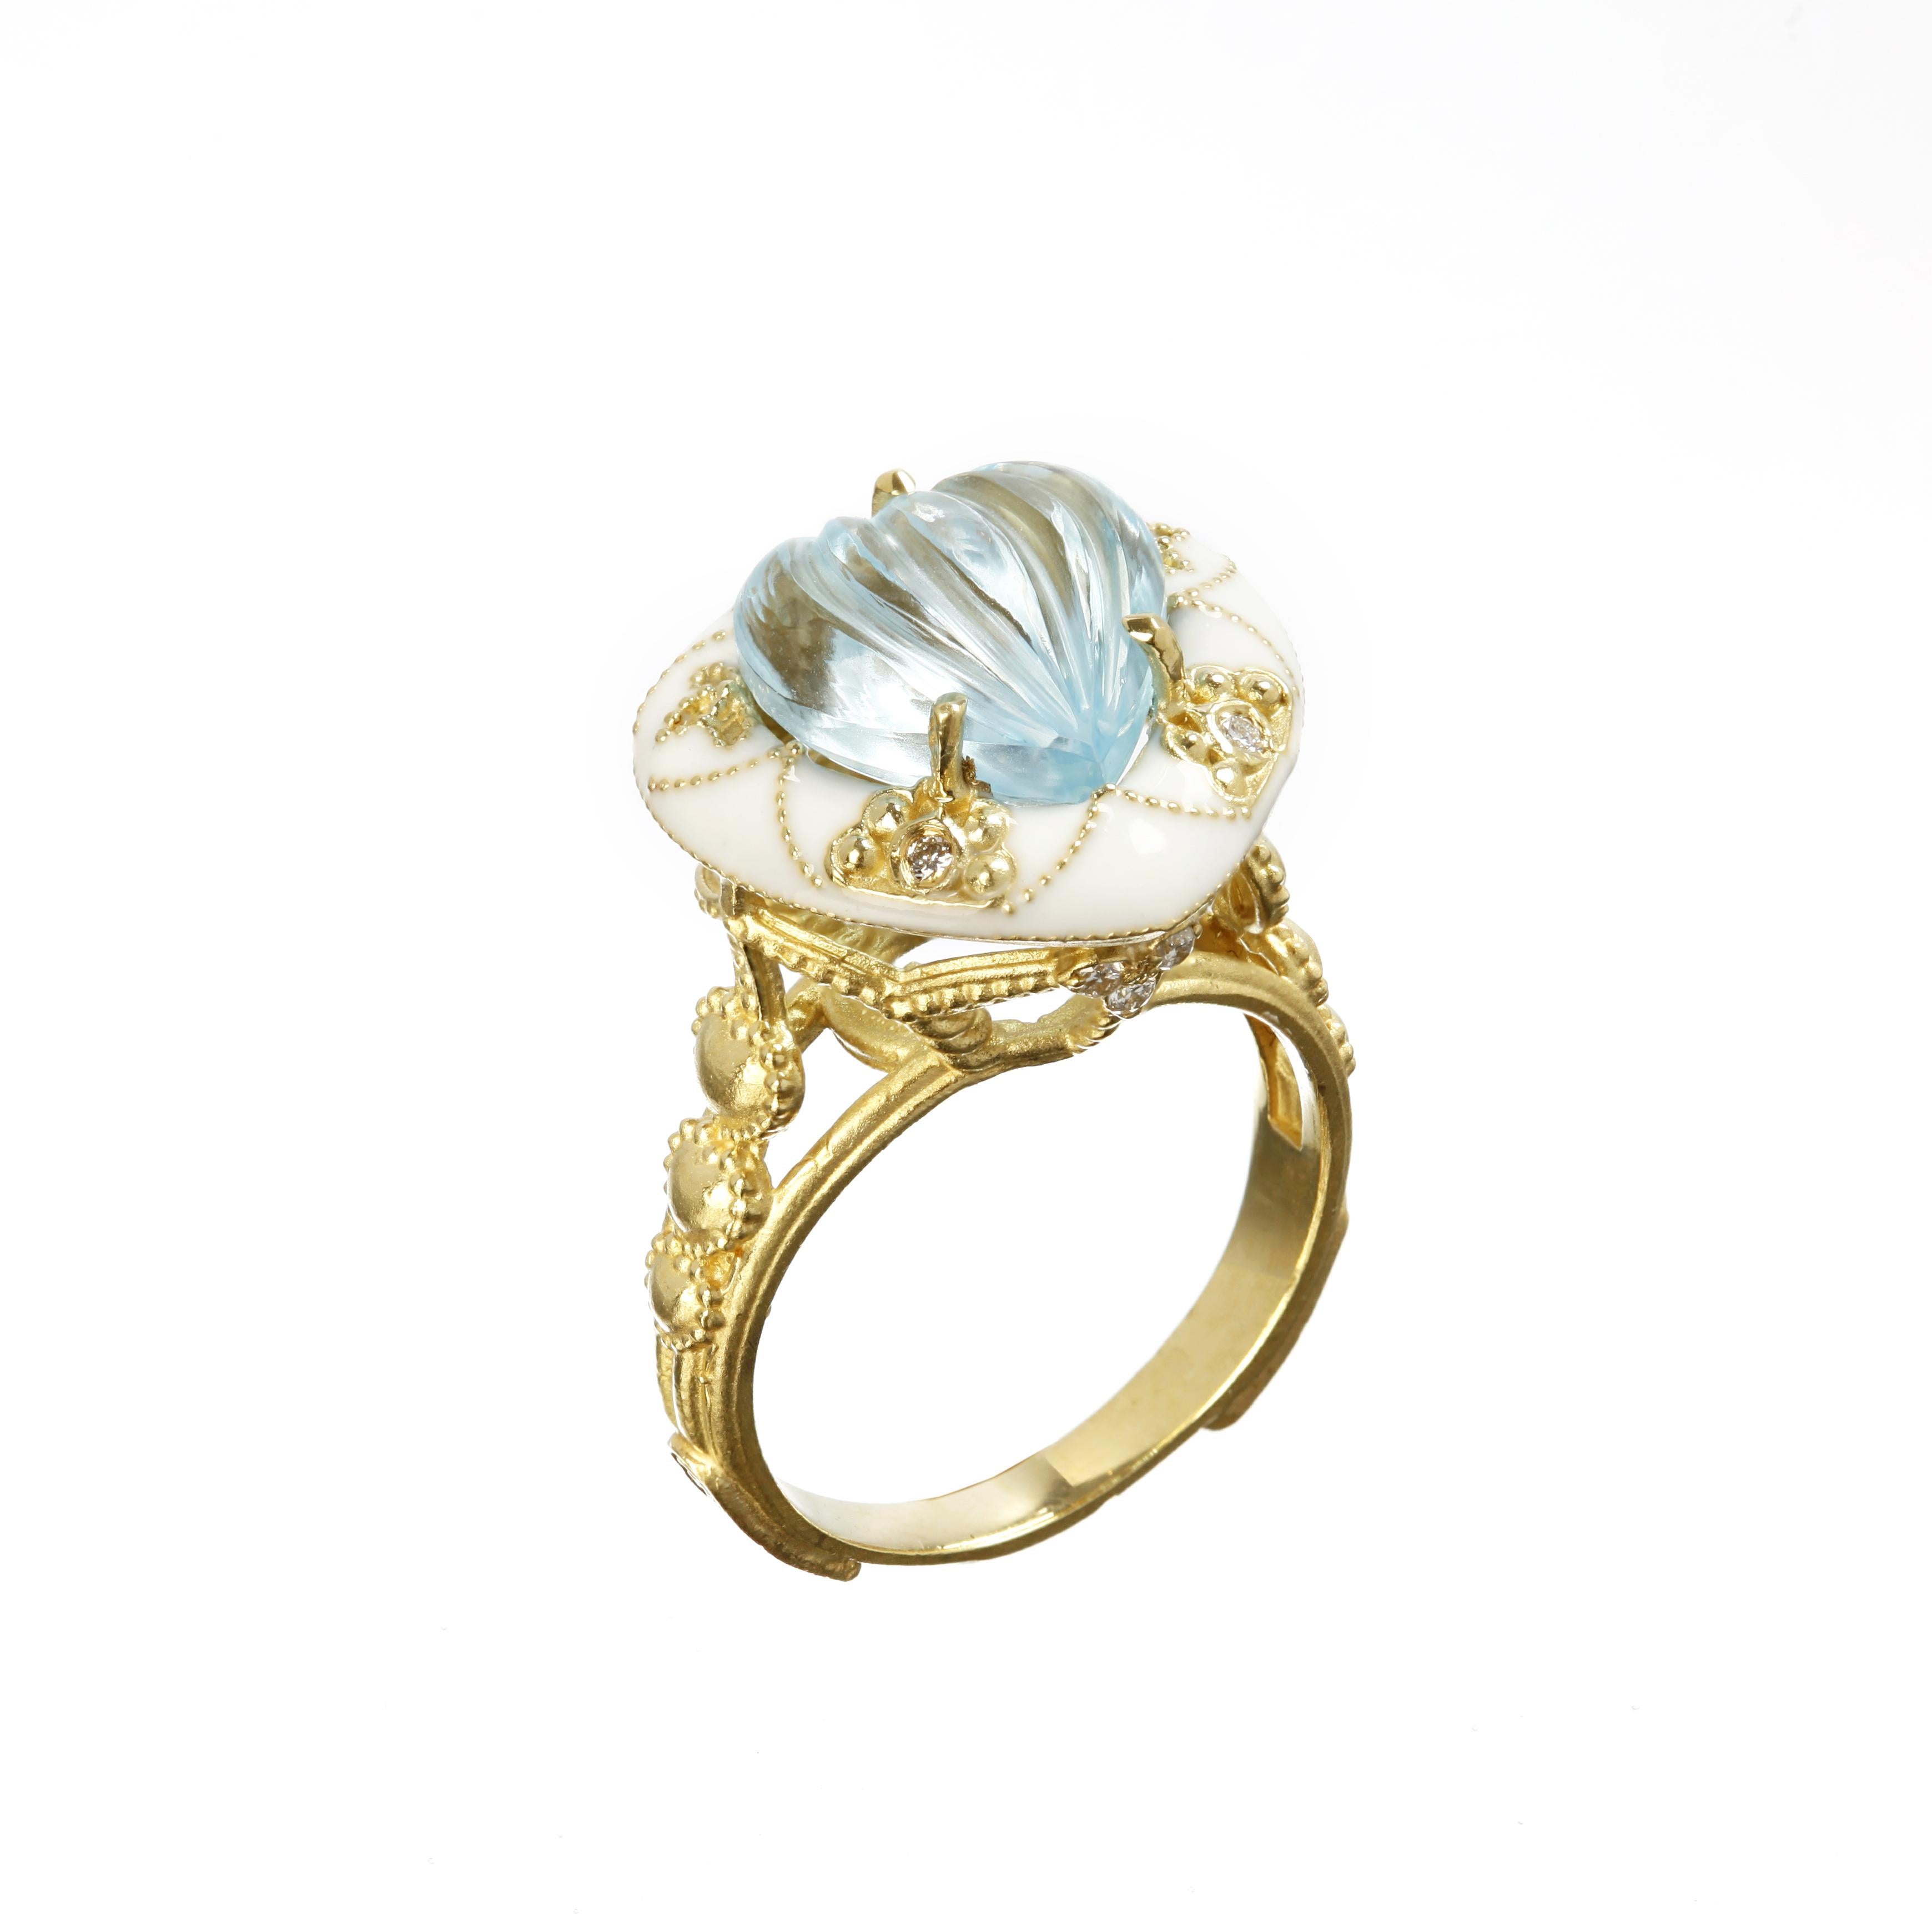 Stambolian 18K Gold Diamond Heart Shape Blue Topaz White Enamel Cocktail Ring

NO RESERVE PRICE

From the Stambolian 